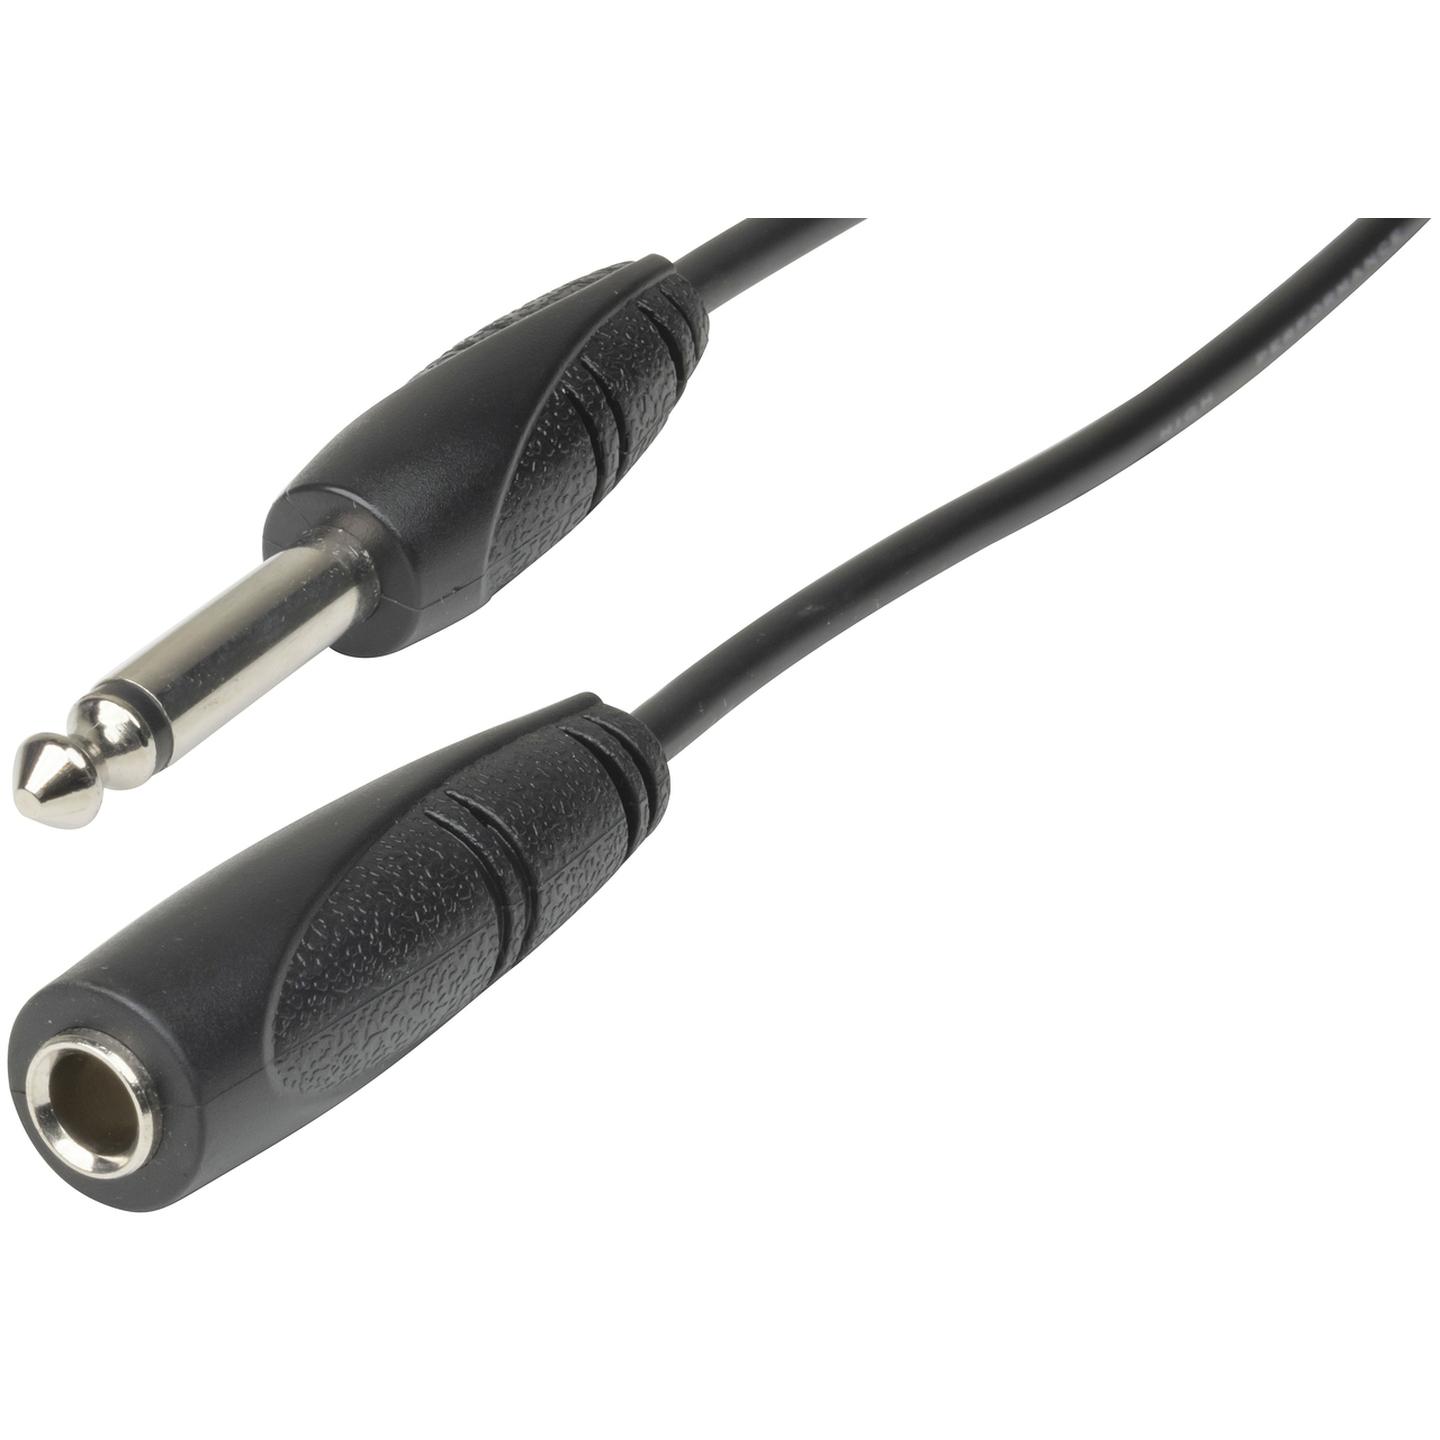 6.5mm Mono Plug to 6.5mm Mono Socket Audio Cable - 5m